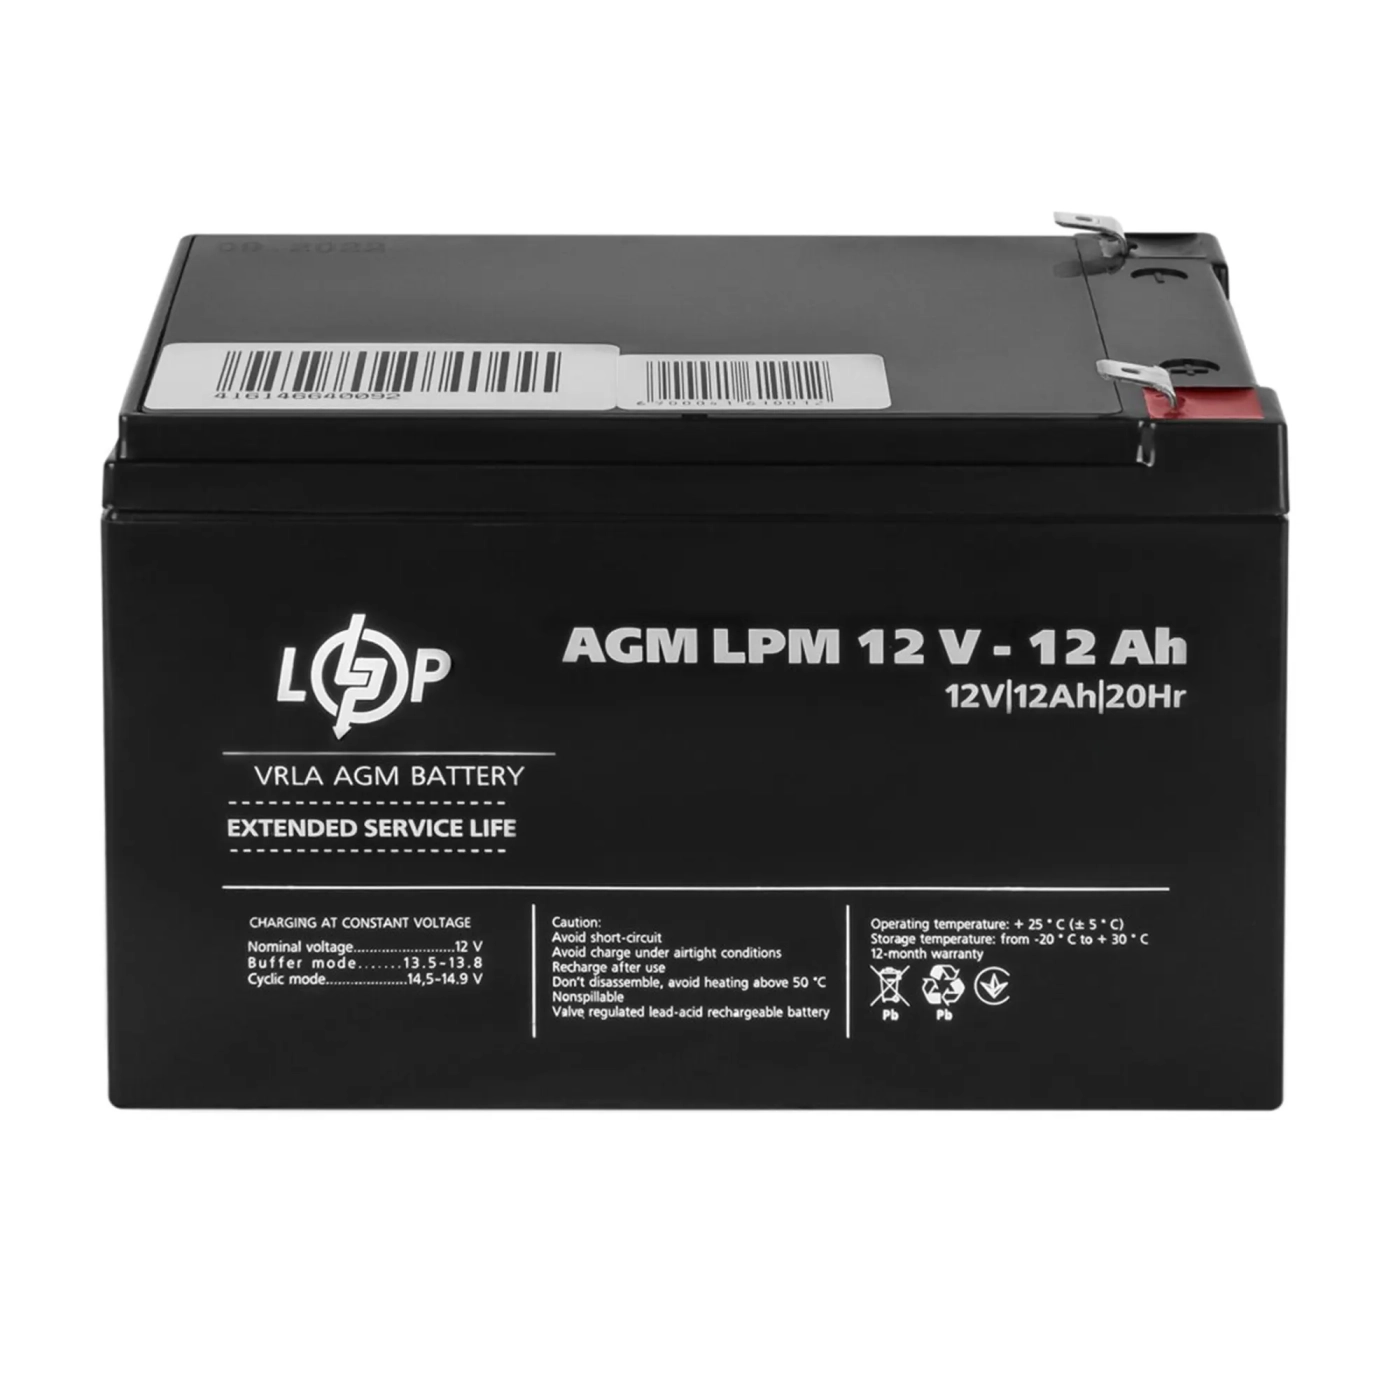 Купить Аккумулятор AGM LPM 12V 12Ah - фото 1